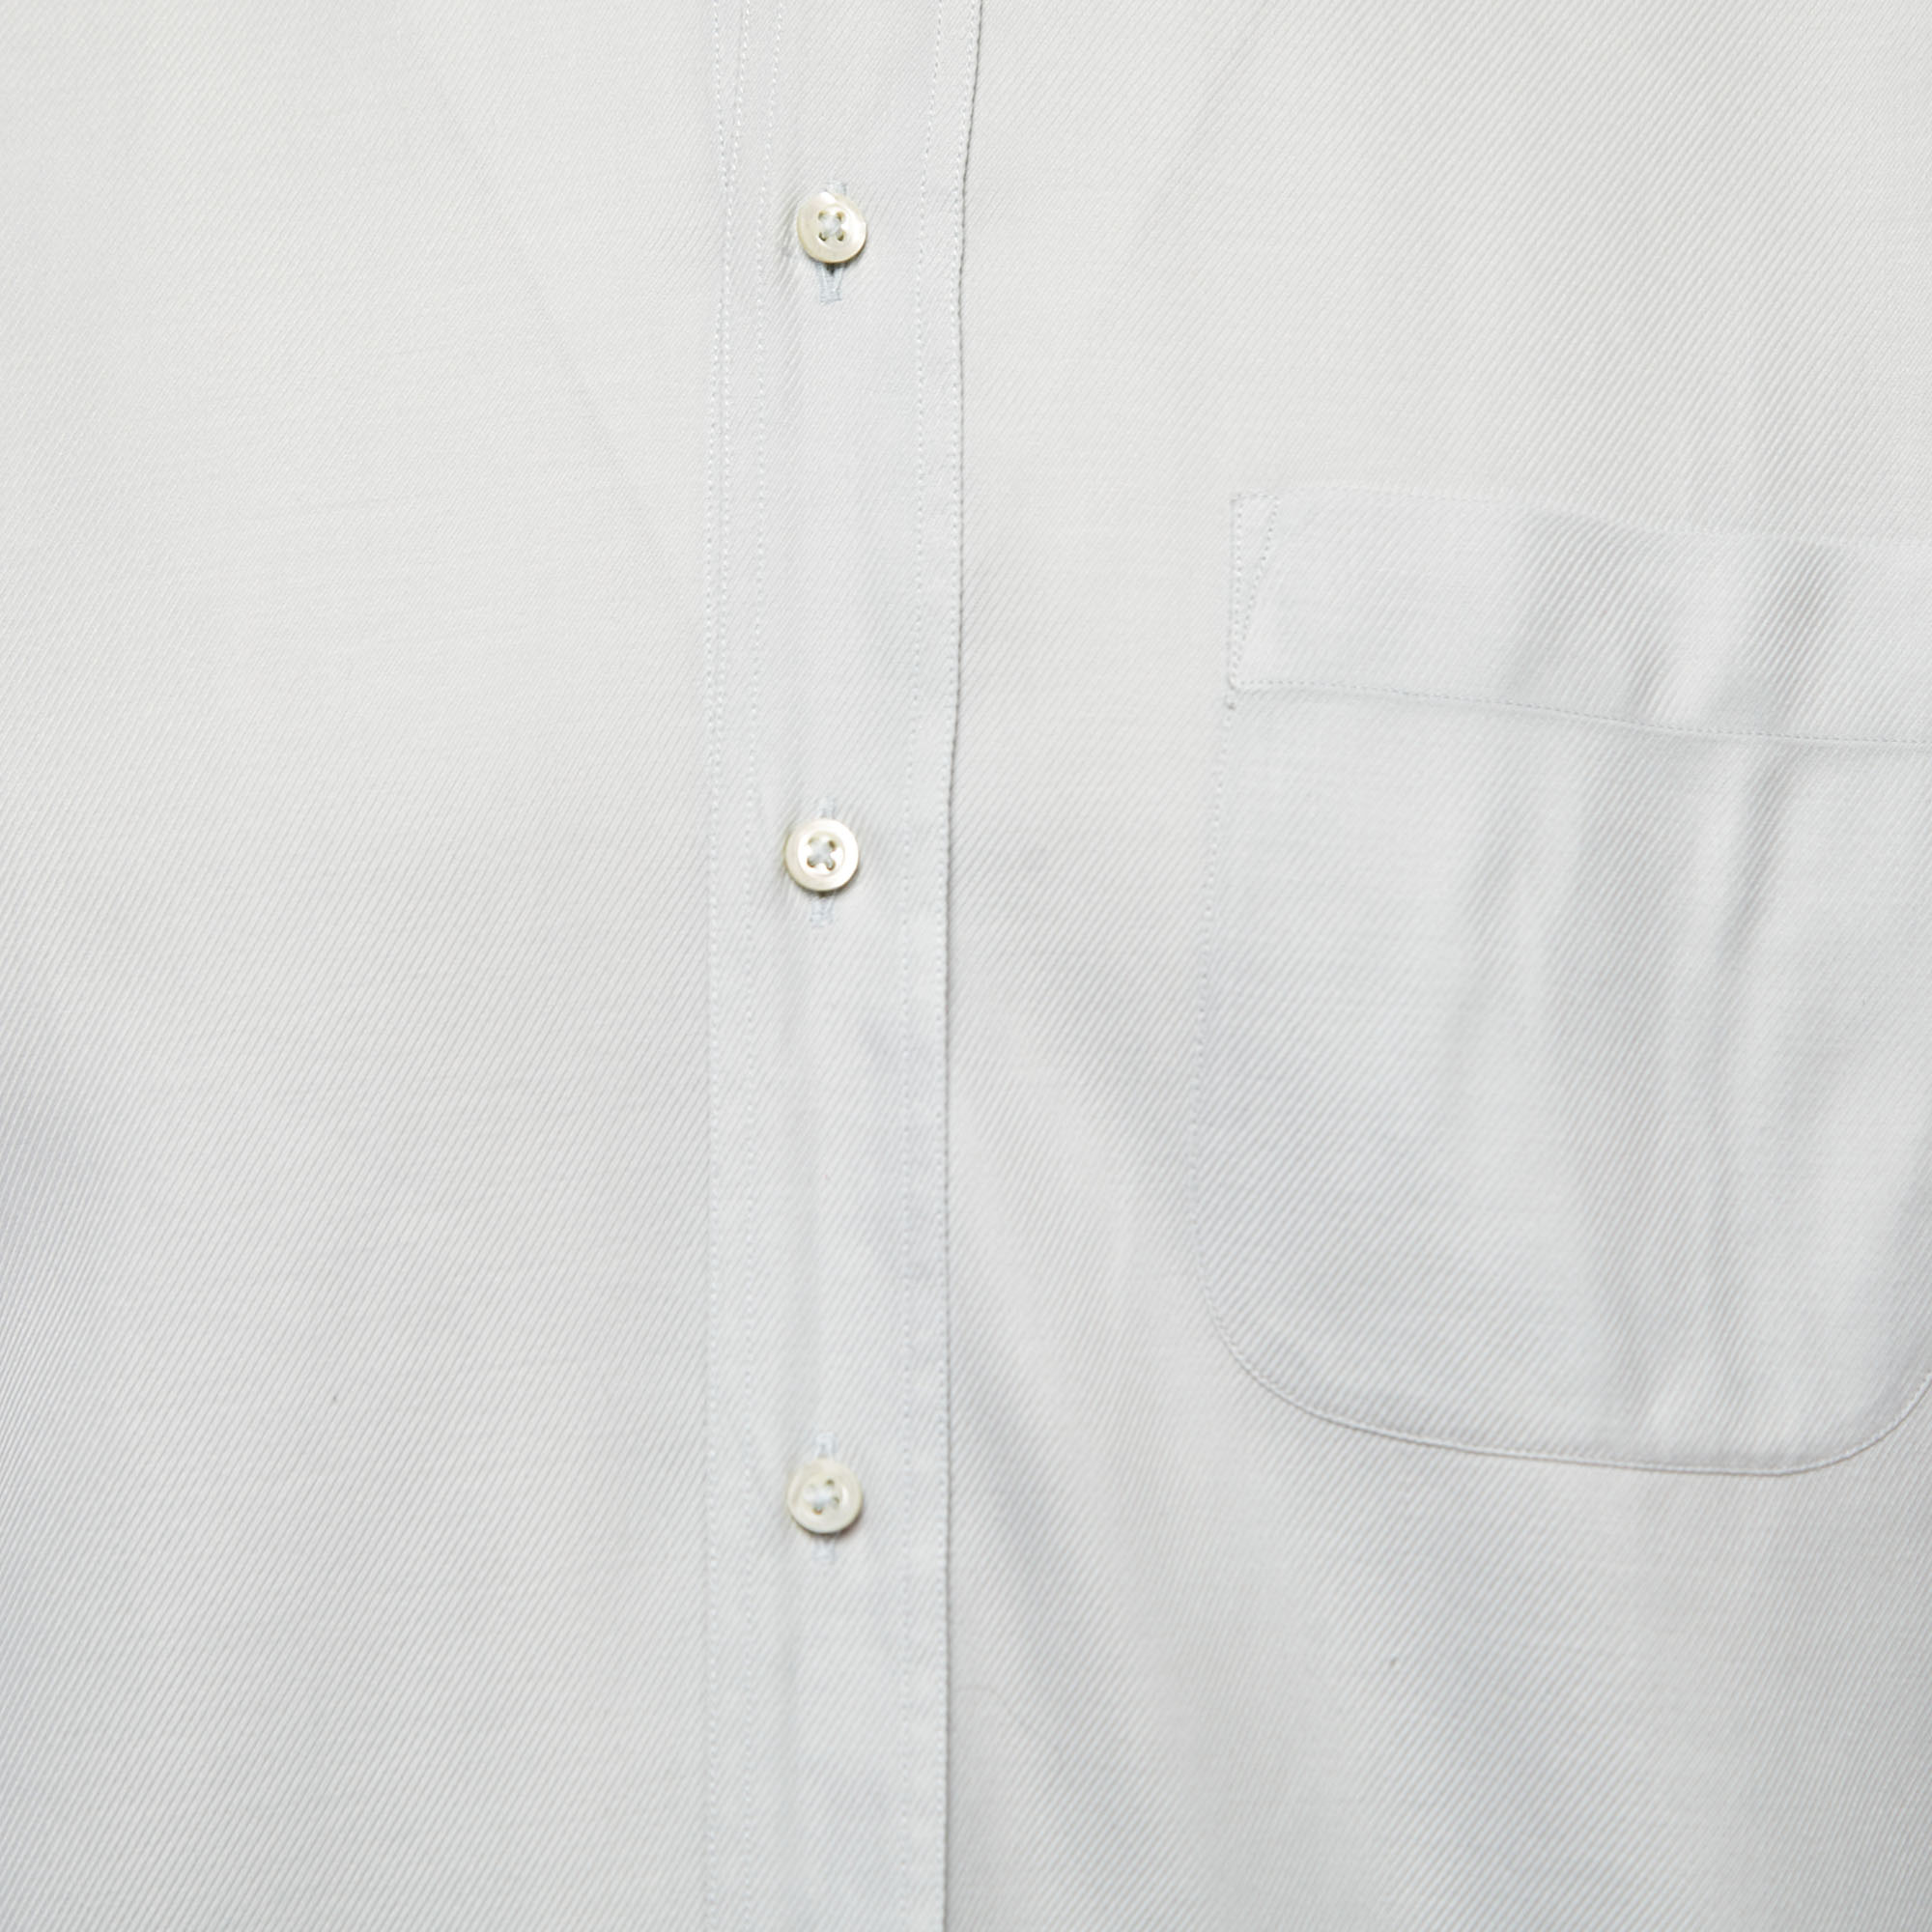 Armani Collezioni Light Grey Cotton Button Down Shirt L